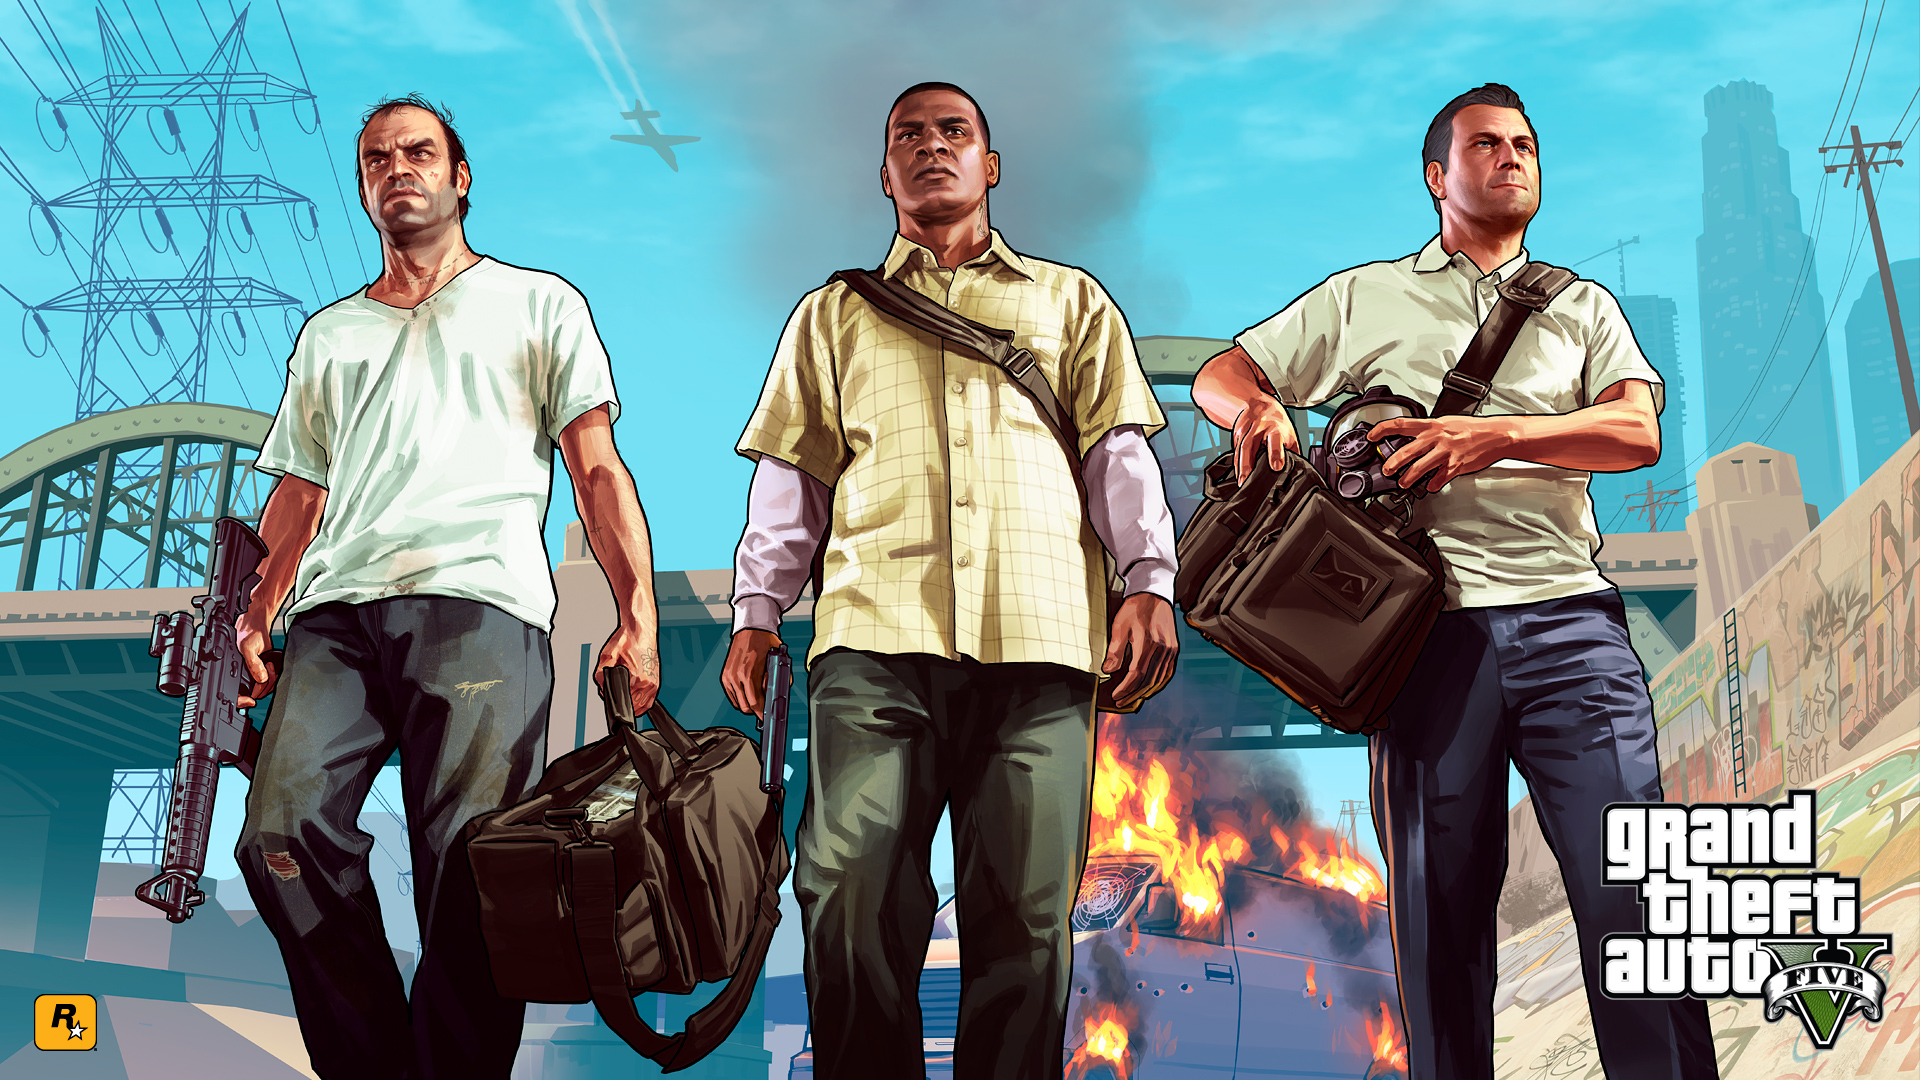 Grand Theft Auto Iv HD Wallpaper Wallpaper55 Best